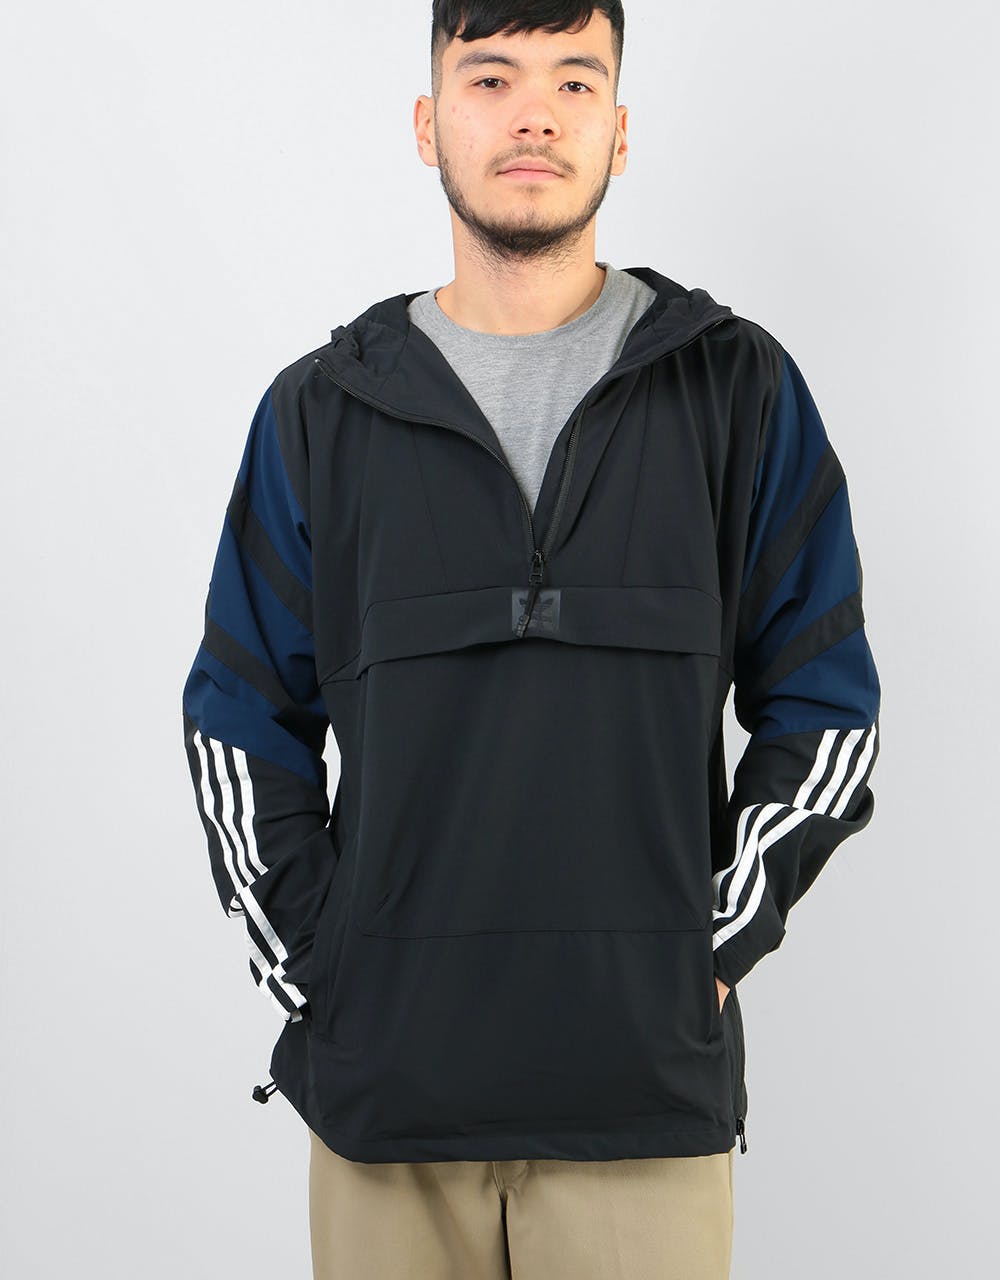 Adidas 3ST Jacket - Black/Collegiate Navy/Carbon